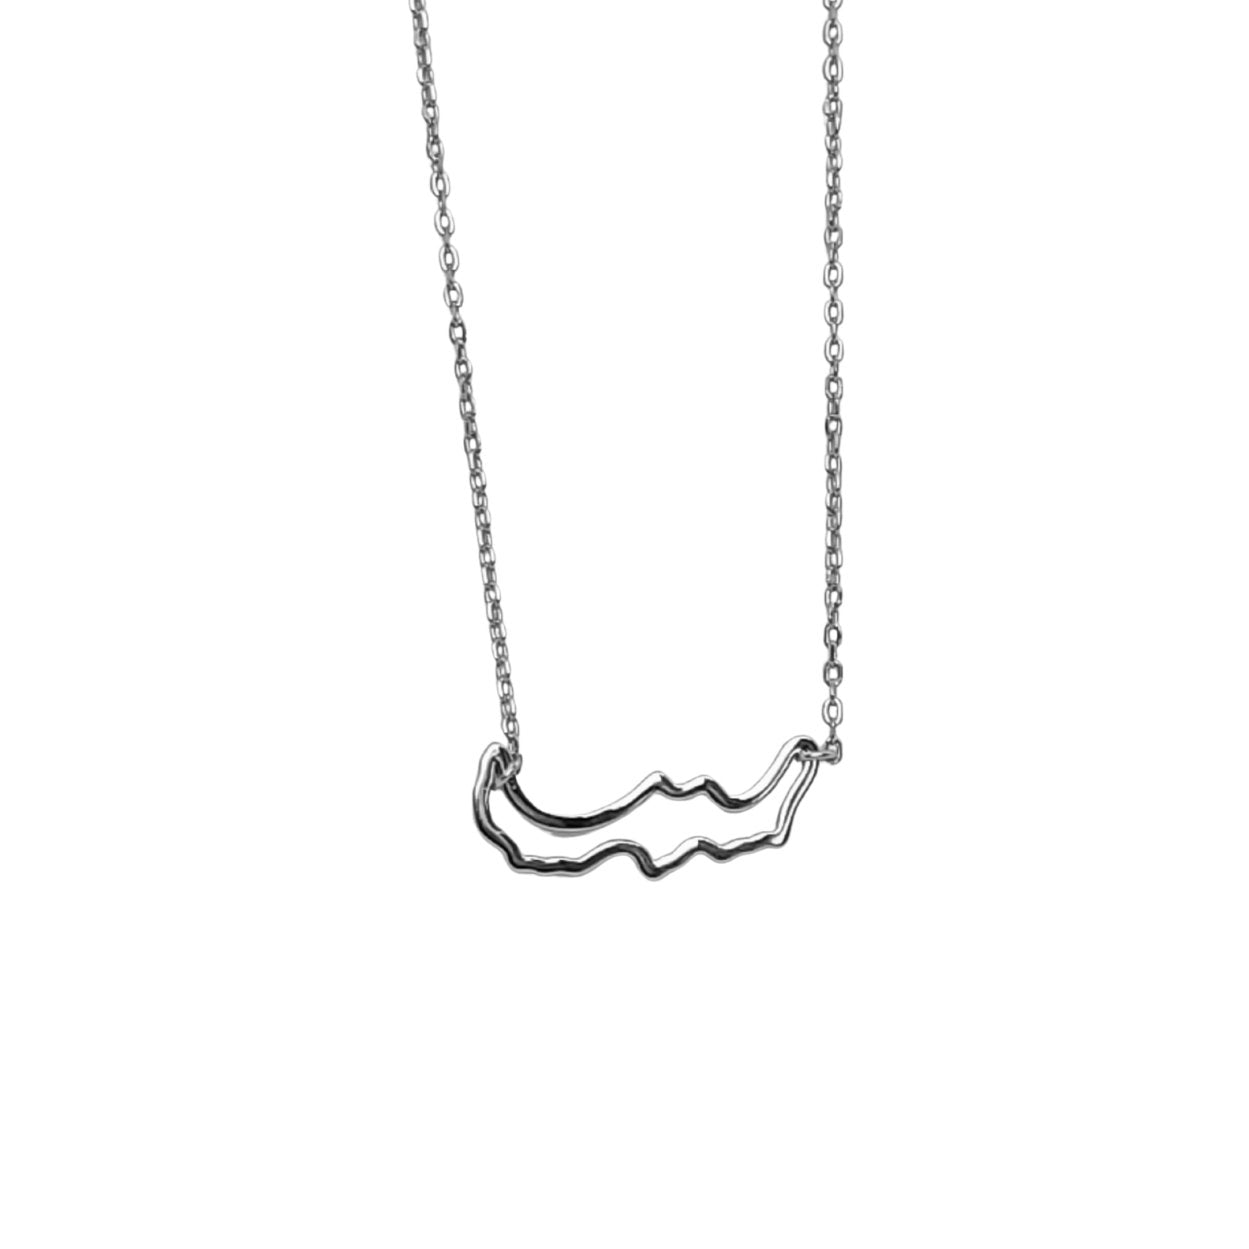 rhodium plated tarnish resistant sterling silver petite Simply Savary adjustable necklace. Souvenir of savary island